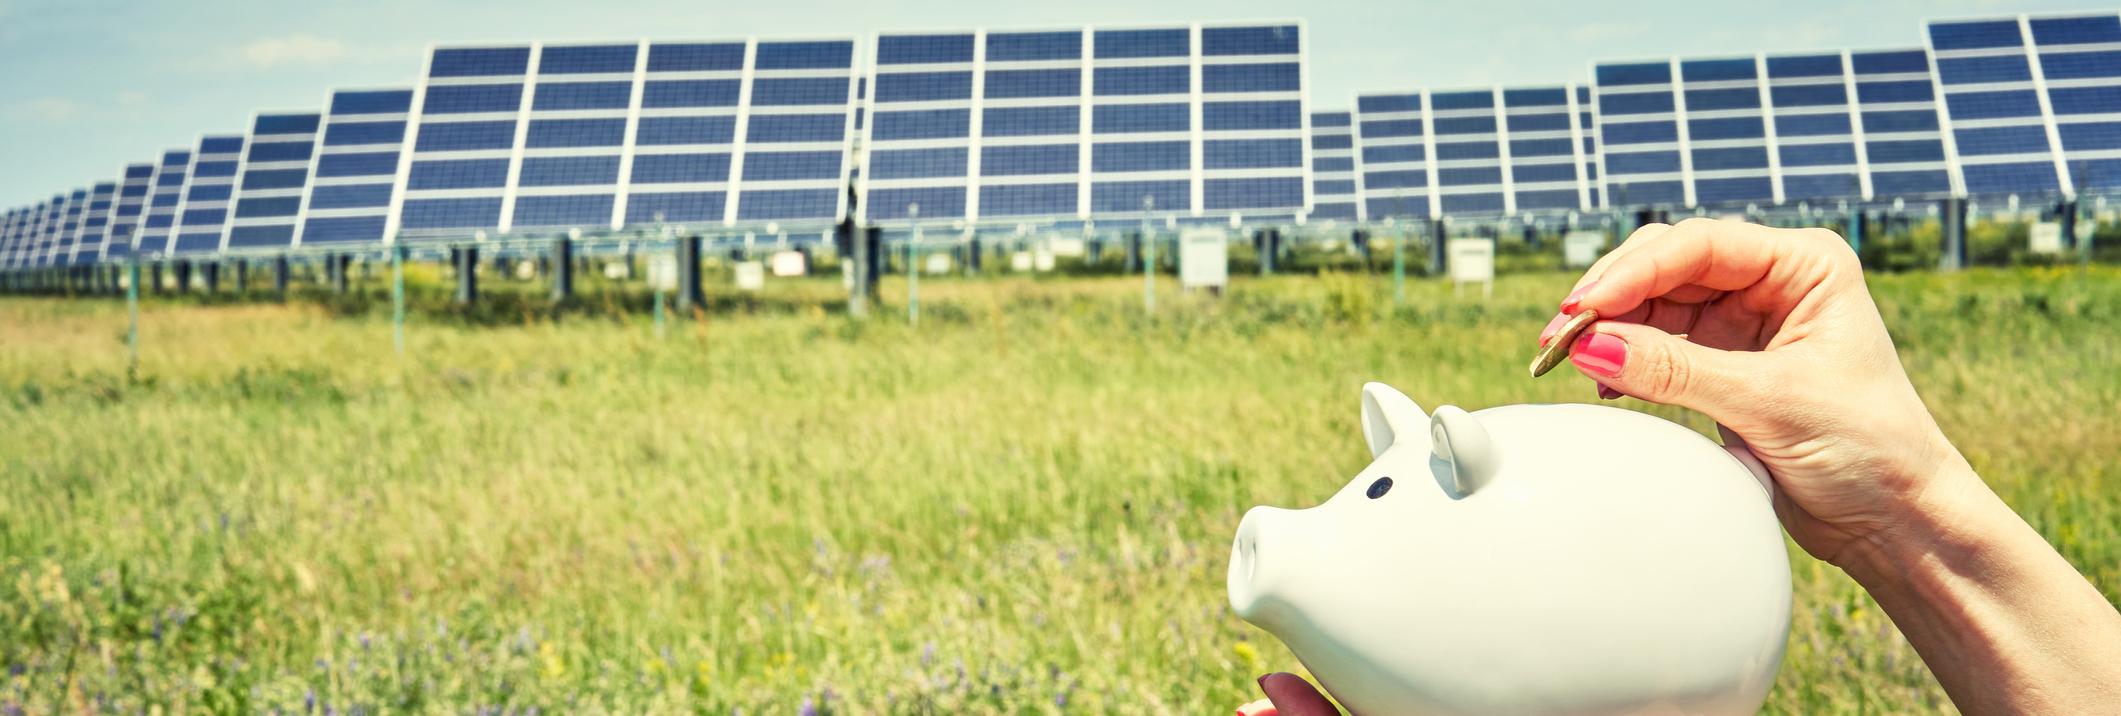 ¿Cuánto podemos ahorrar instalando paneles solares?